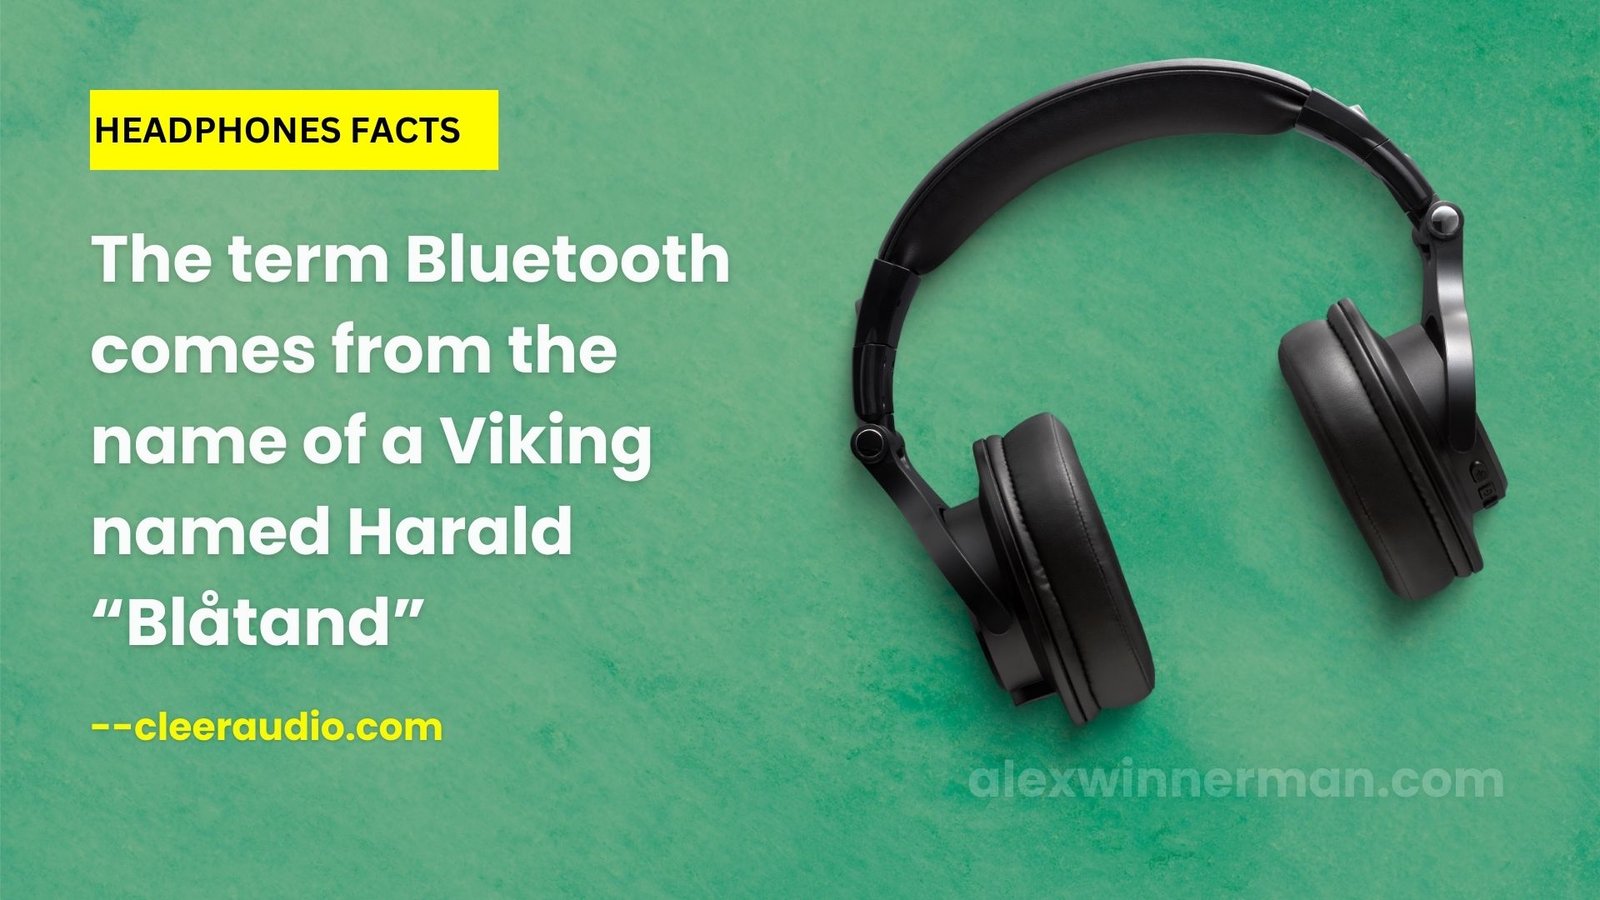 Headphone Facts